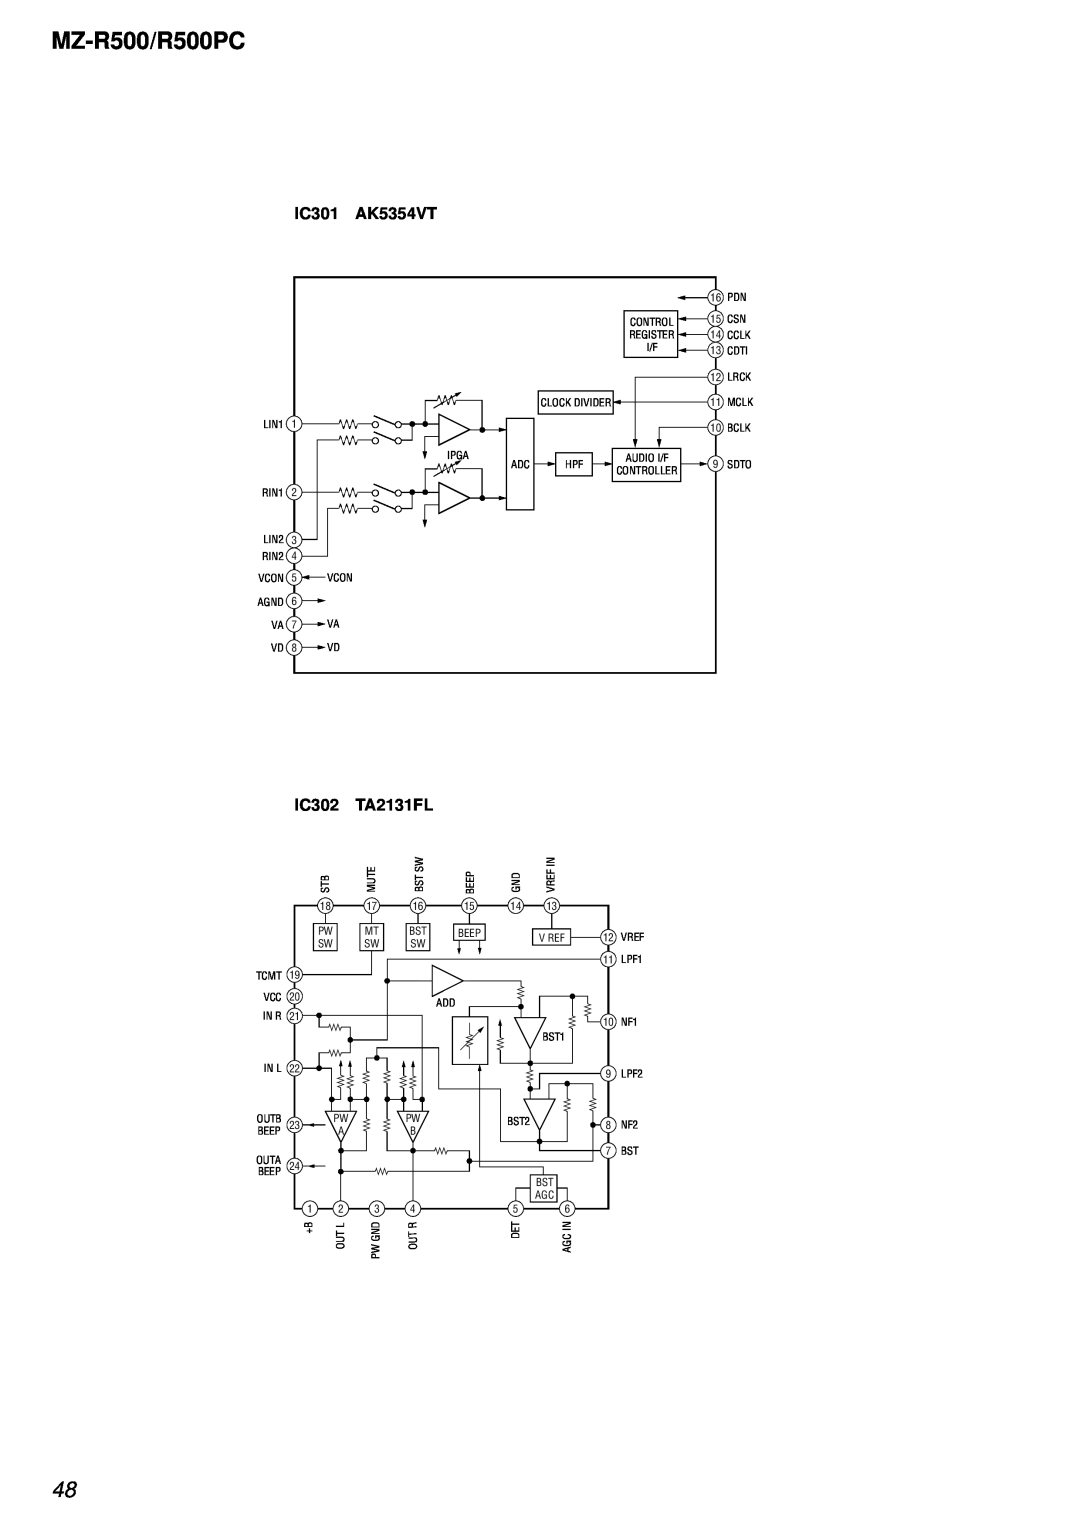 Sony service manual MZ-R500/R500PC, IC301 AK5354VT, IC302, TA2131FL 